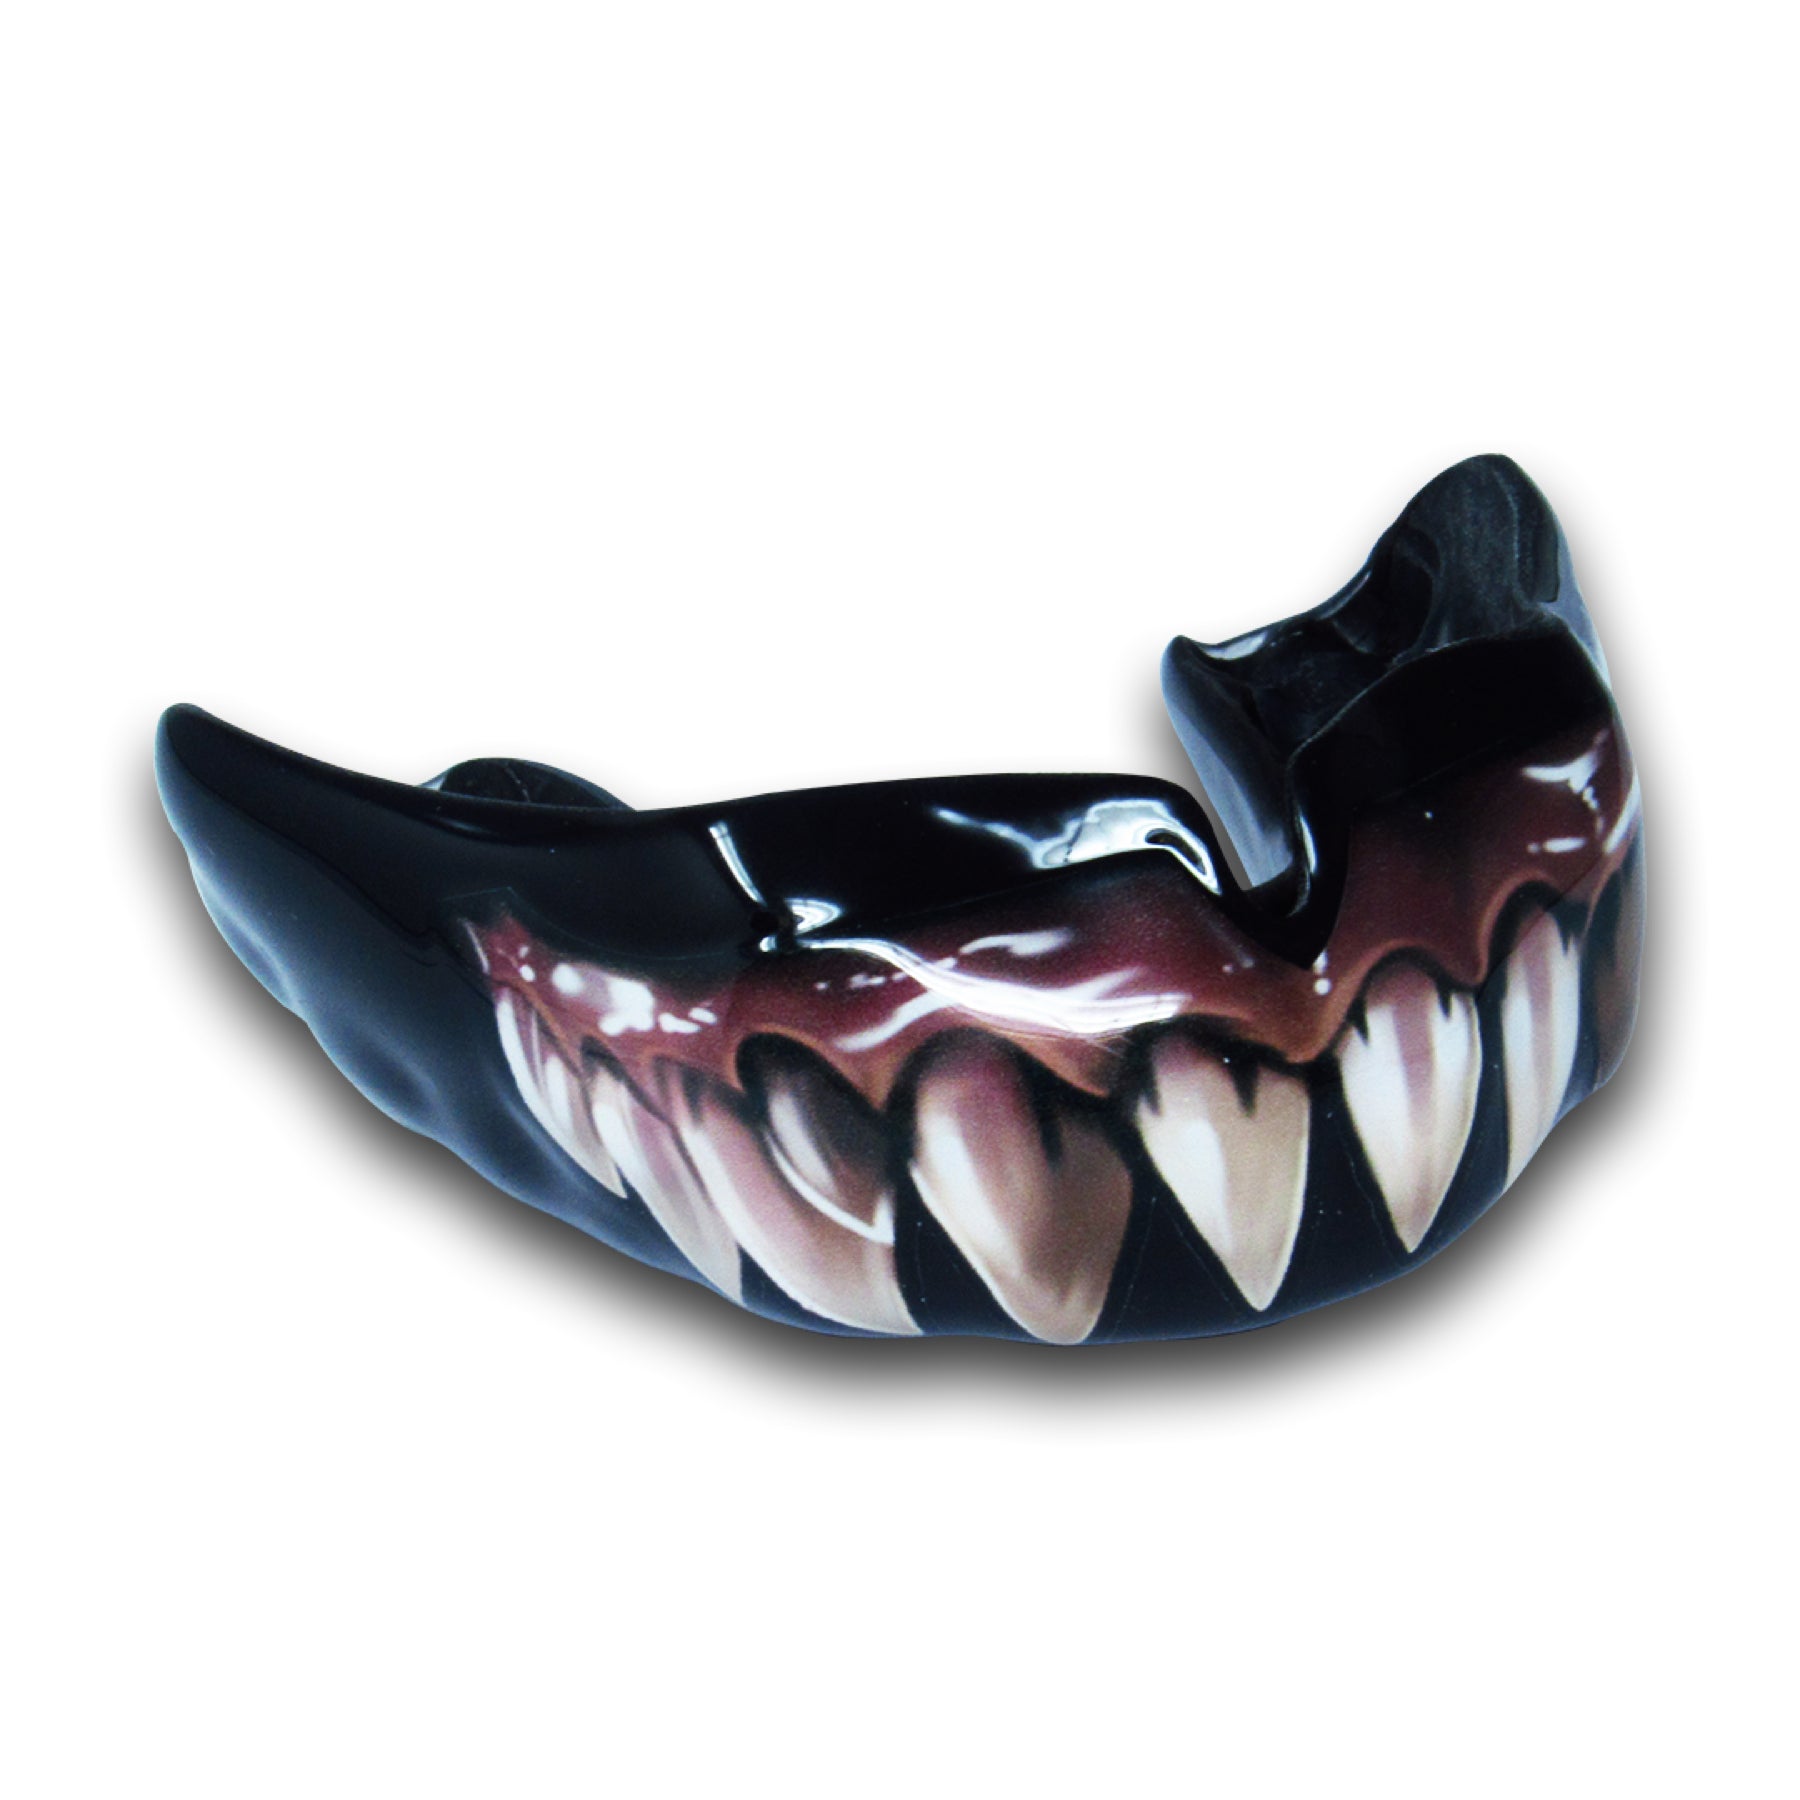 Real Teeth Mouthguard